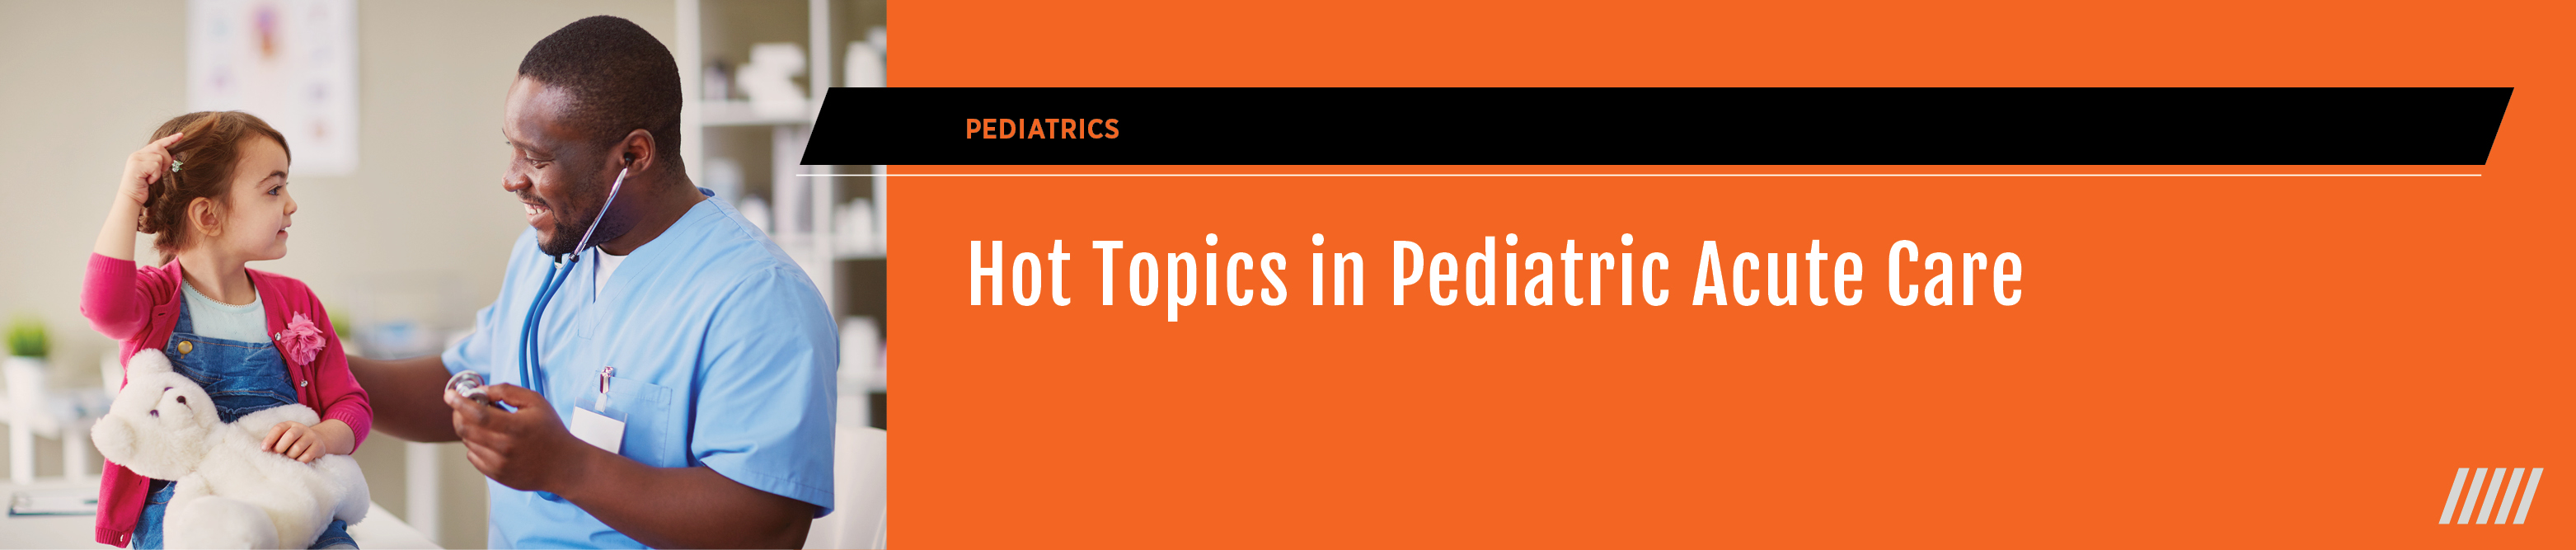 Hot Topics in Pediatric Acute Care - 2021 Spring Fling Banner